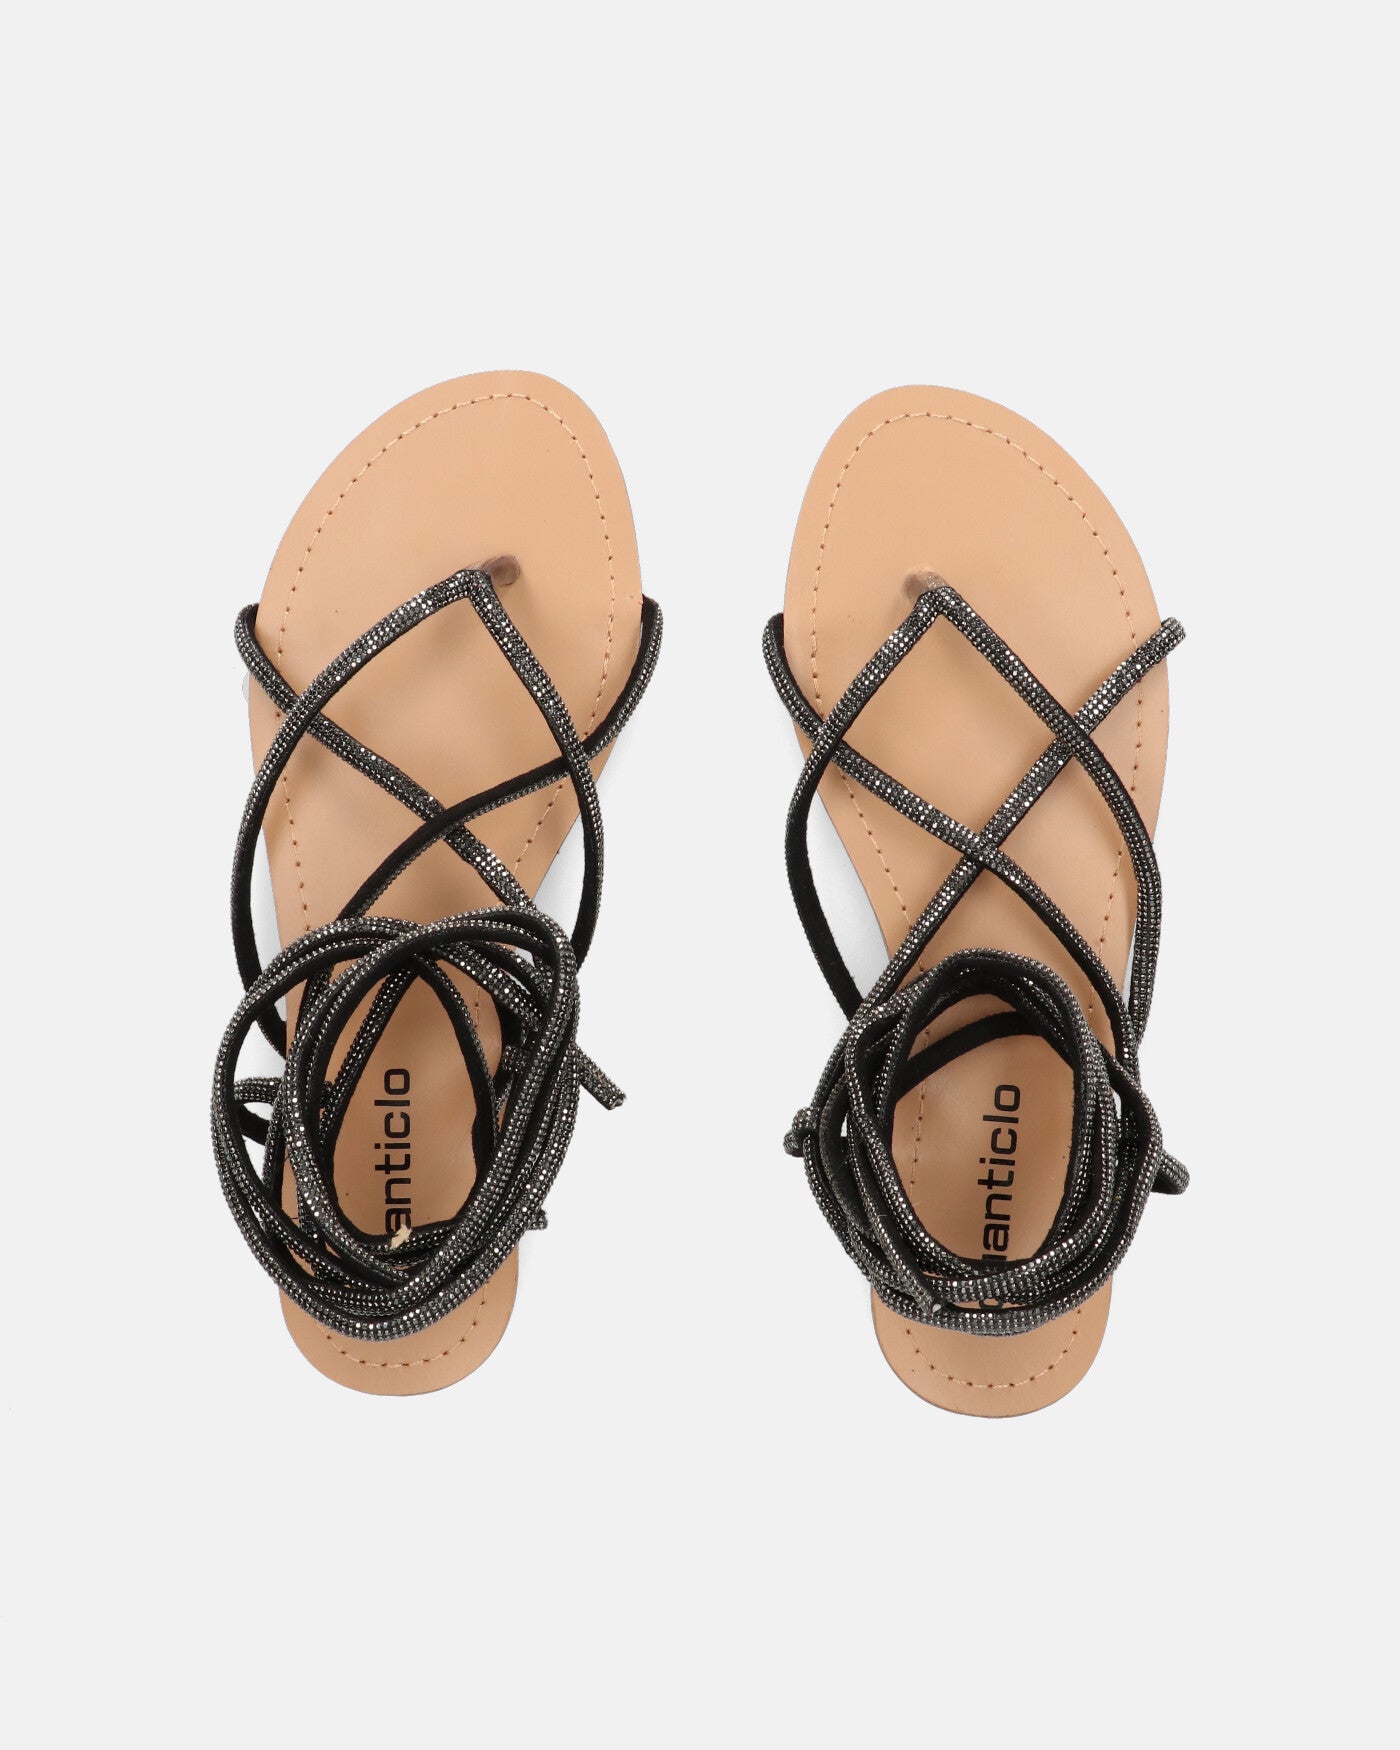 JANIRA - flat sandals with black glitter laces